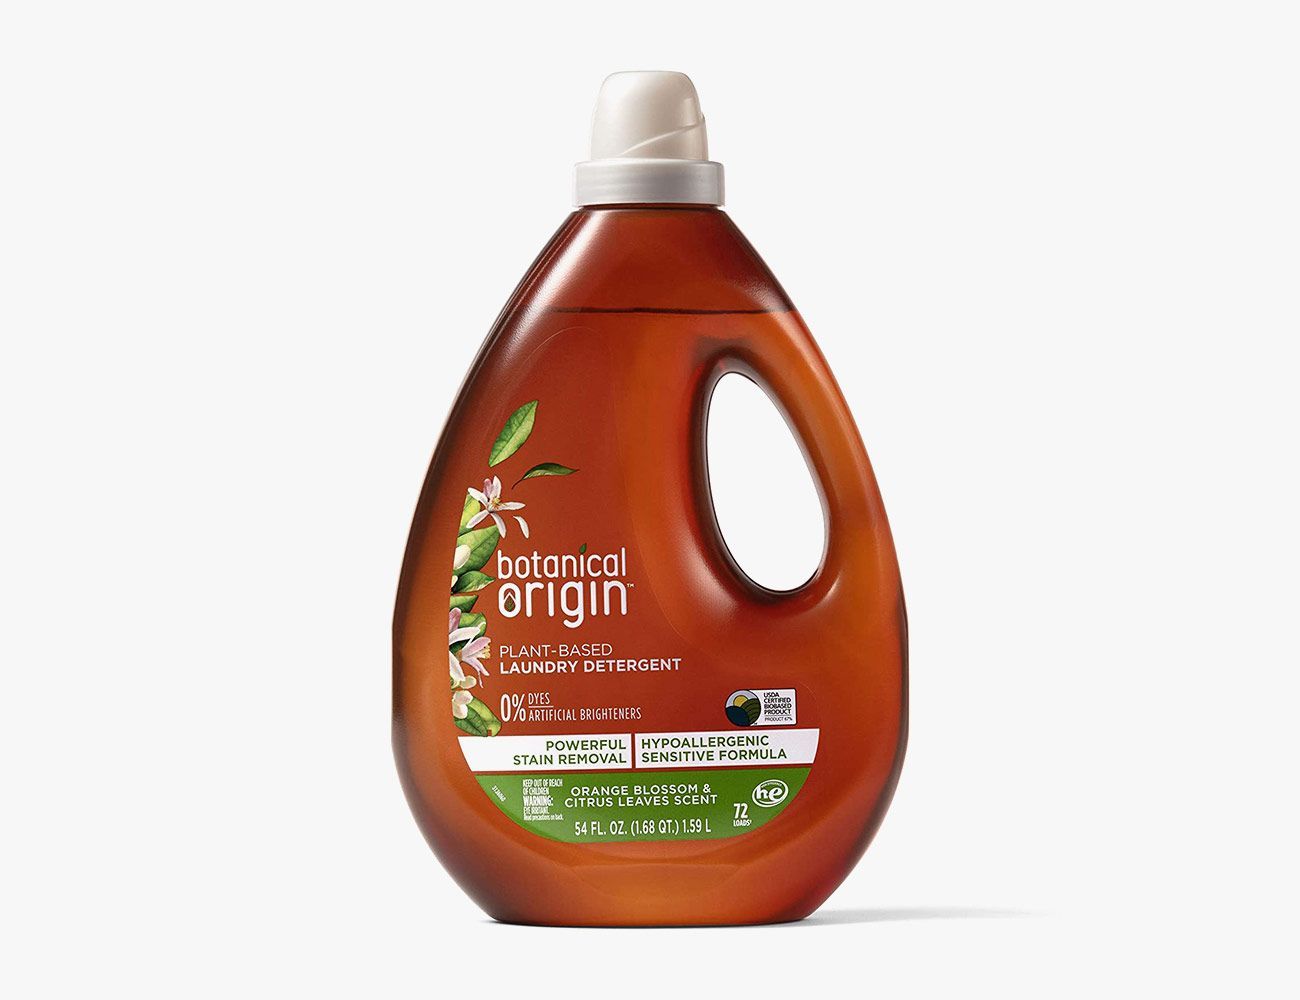 Botanic Original. Botanical Origin Green got tough natural based Laundry Detergent. Botanic additions. Plant origin